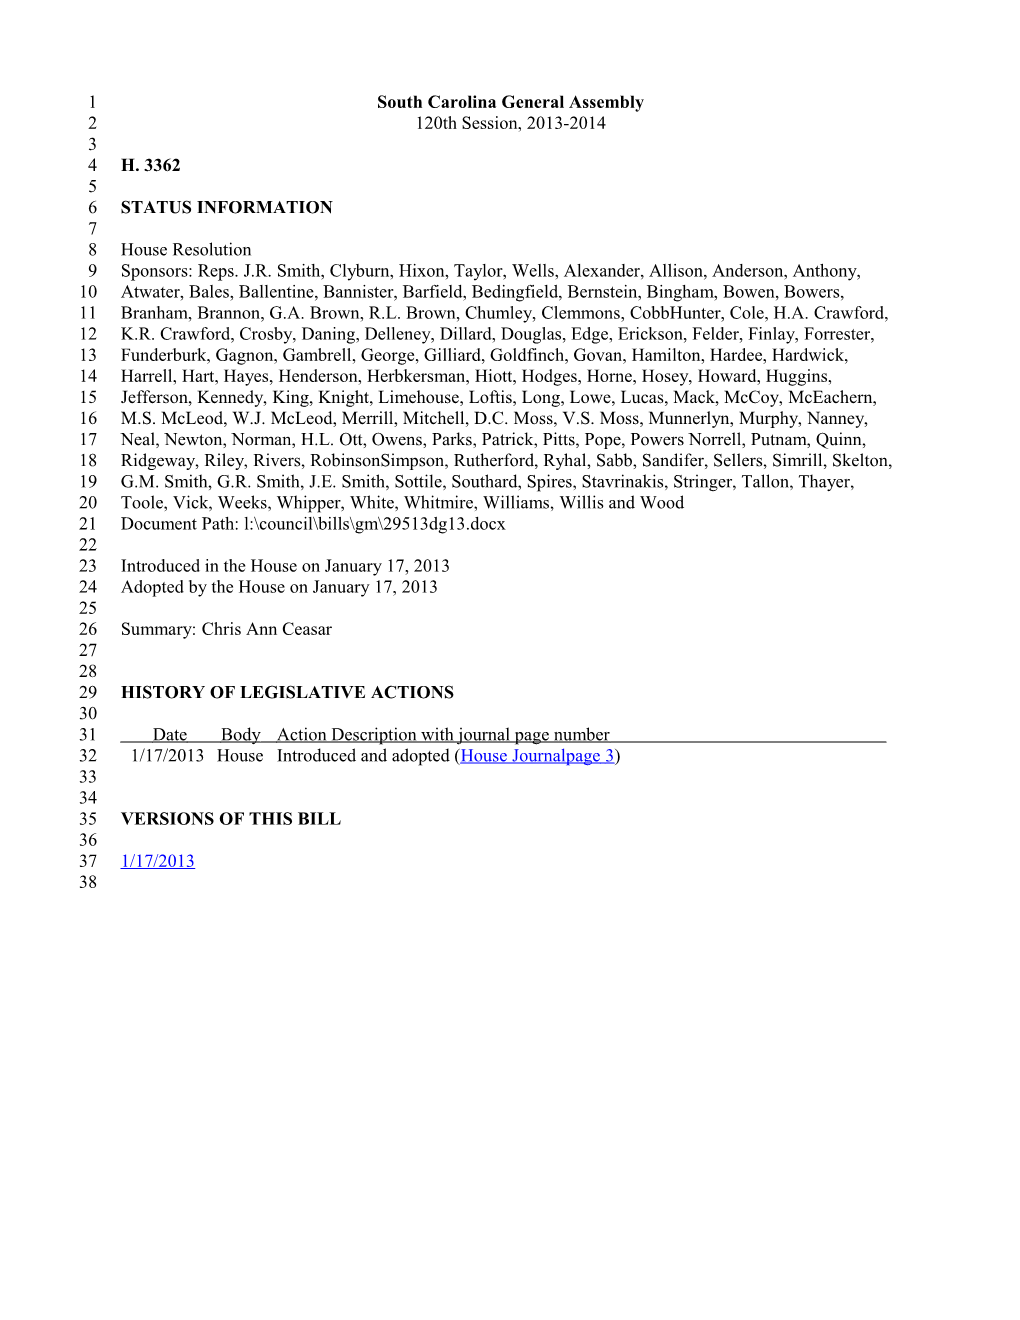 2013-2014 Bill 3362: Chris Ann Ceasar - South Carolina Legislature Online